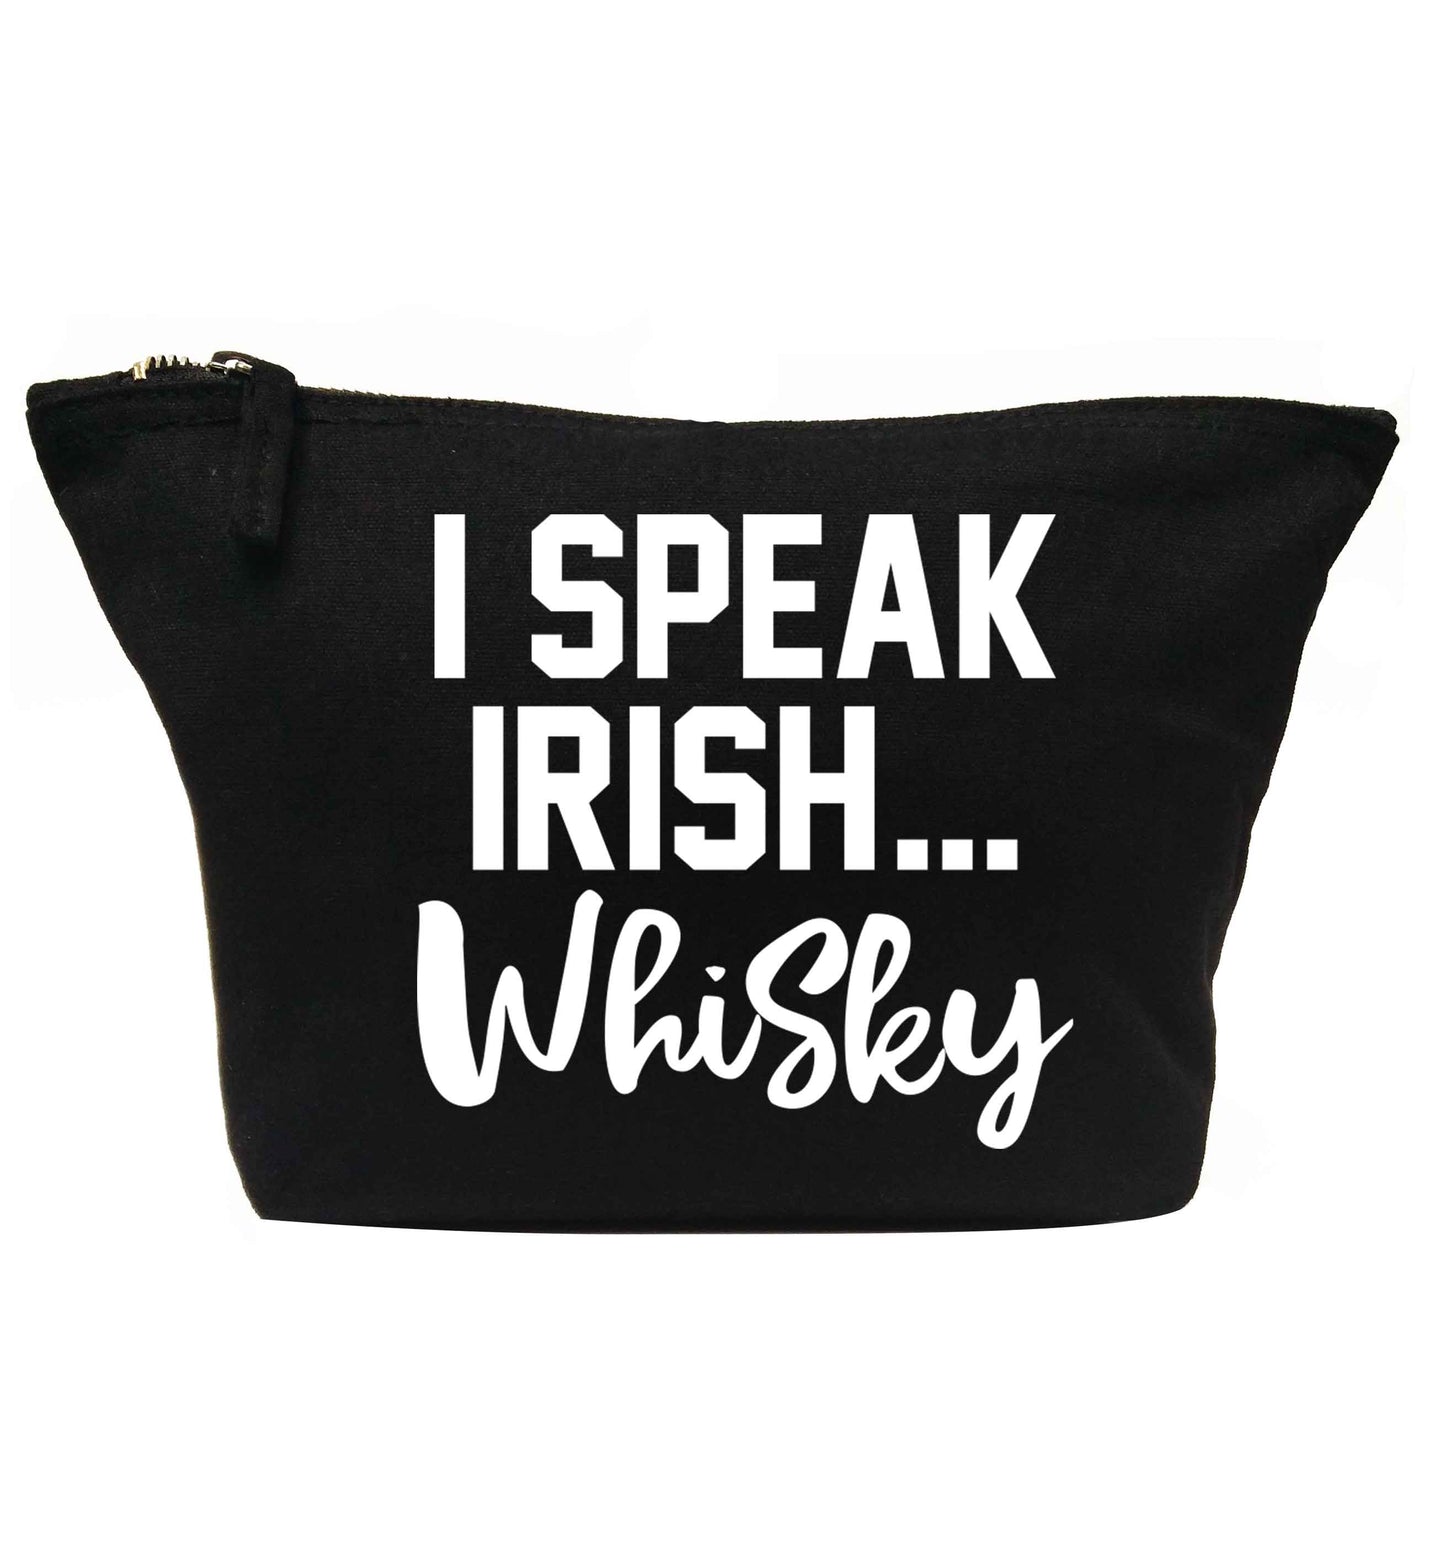 I speak Irish whisky | Makeup / wash bag